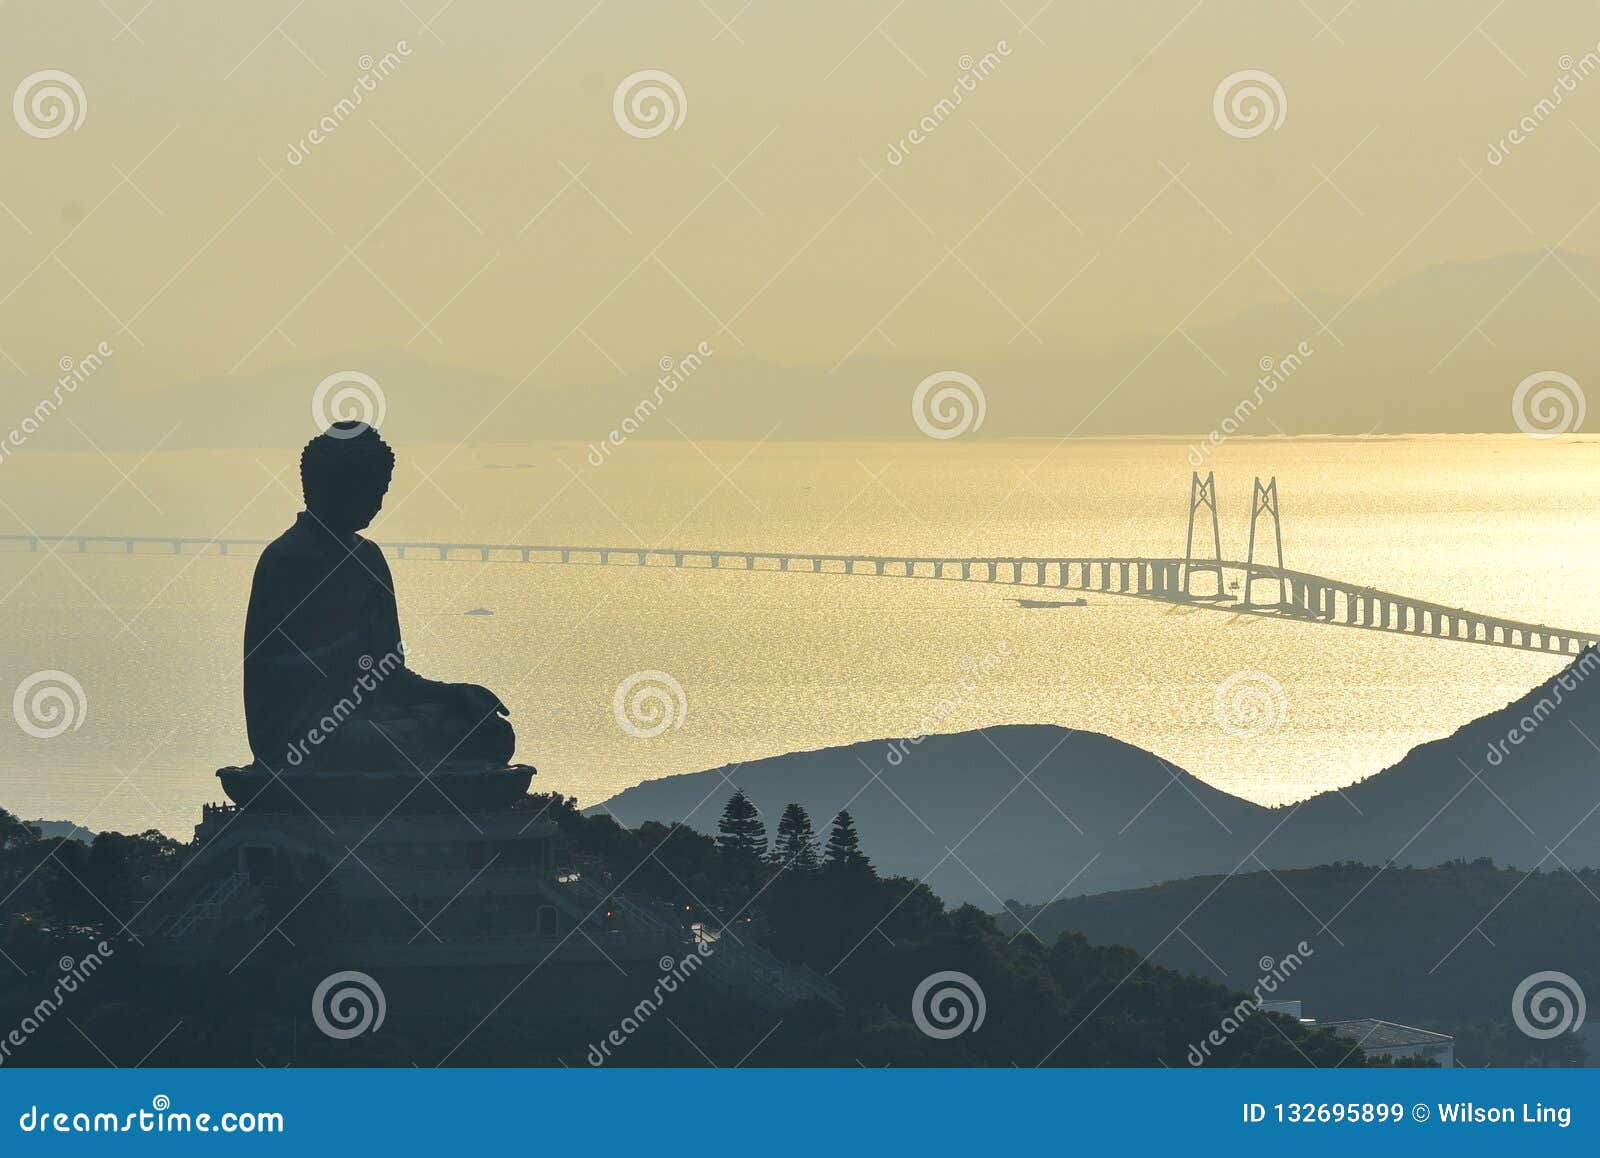 hong kong buddha statue and hong kong-zhuhai-macao bridge